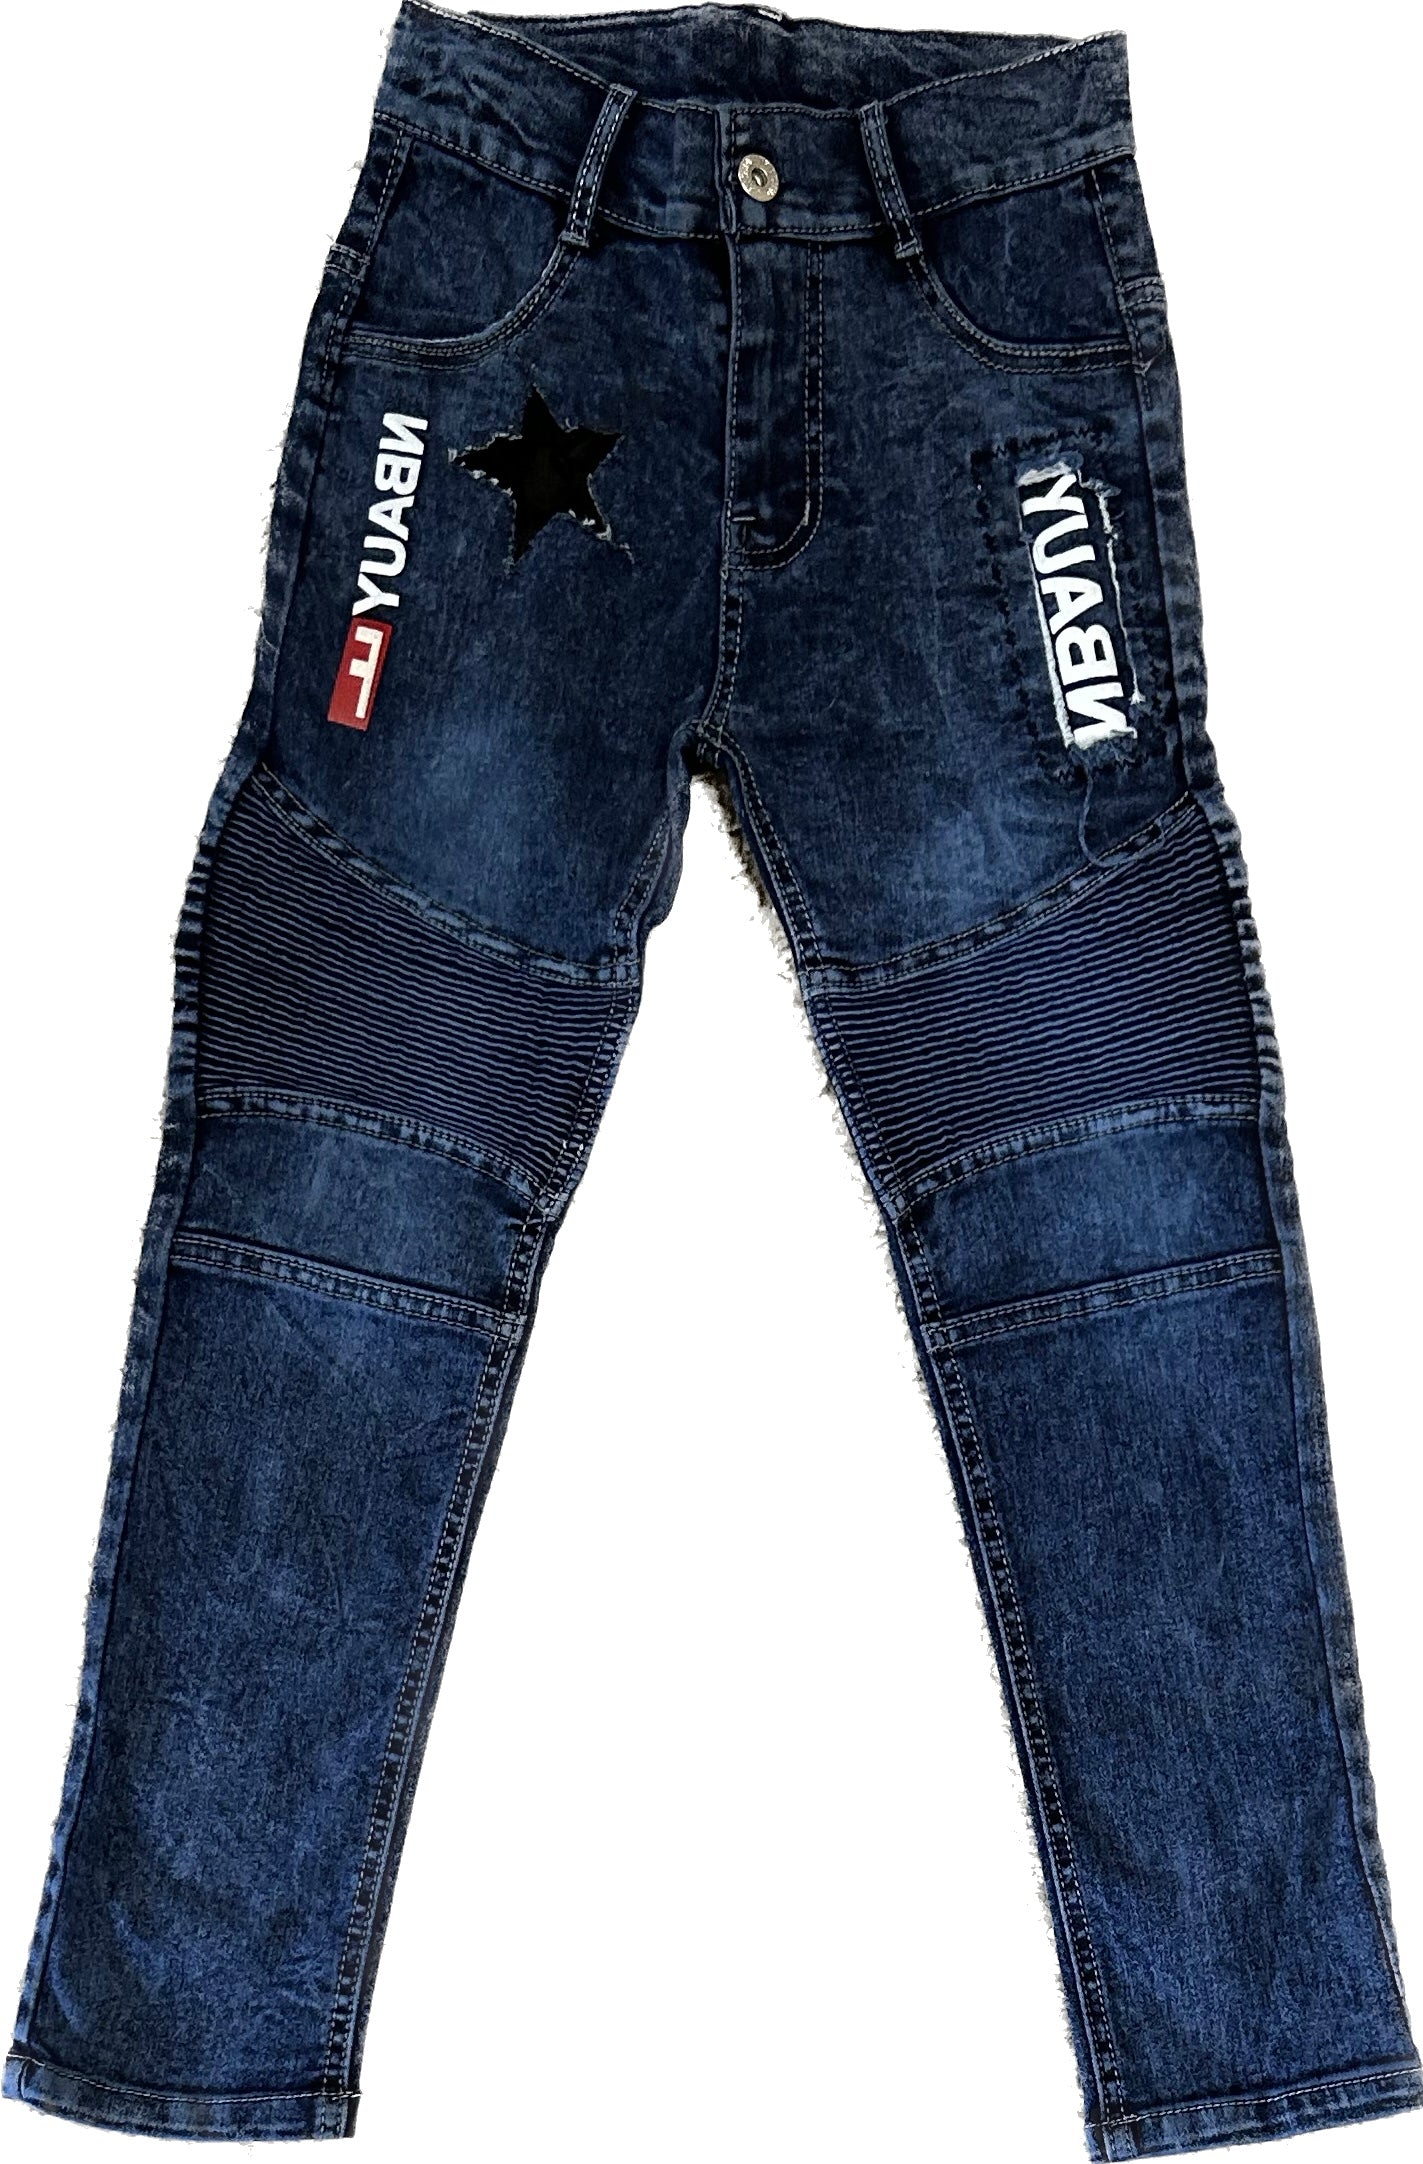 Children's RockStar-U-JE3 Designer Jeans